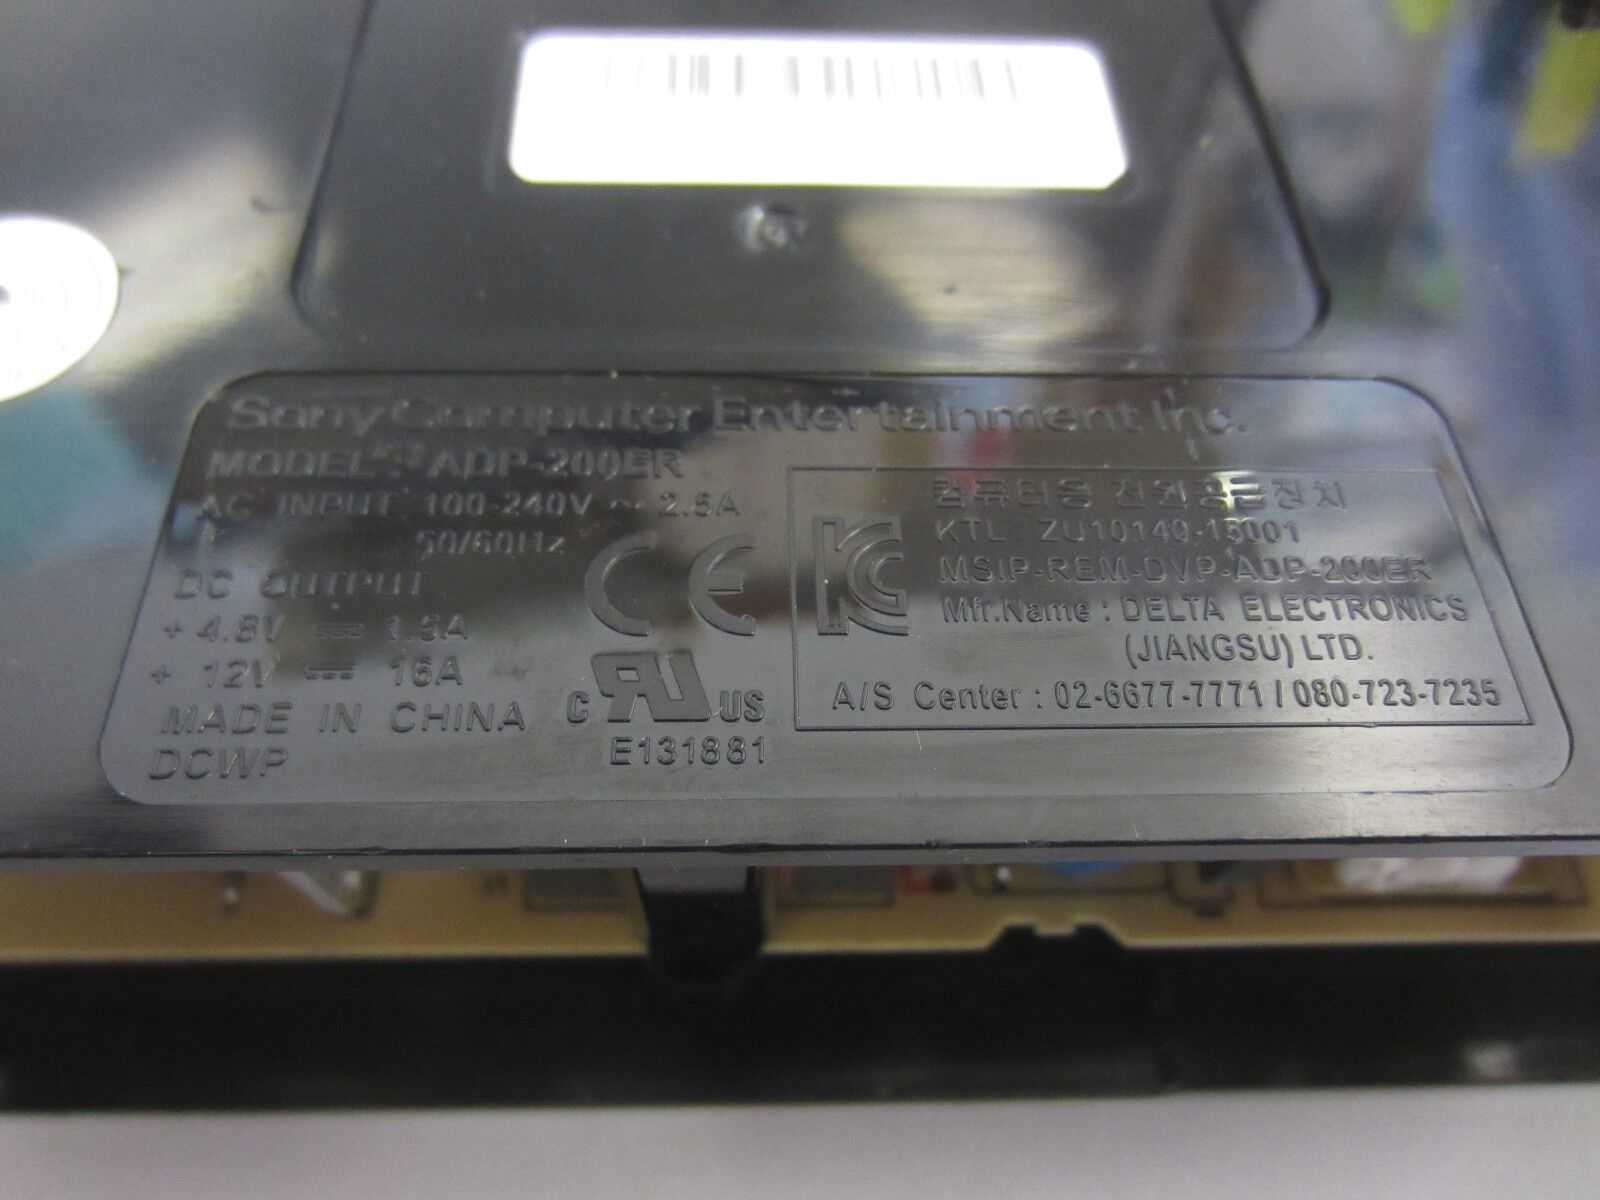 Original Sony PS4 ADP-200ER Power Supply for CUH-1215A CUH-12xxA Series